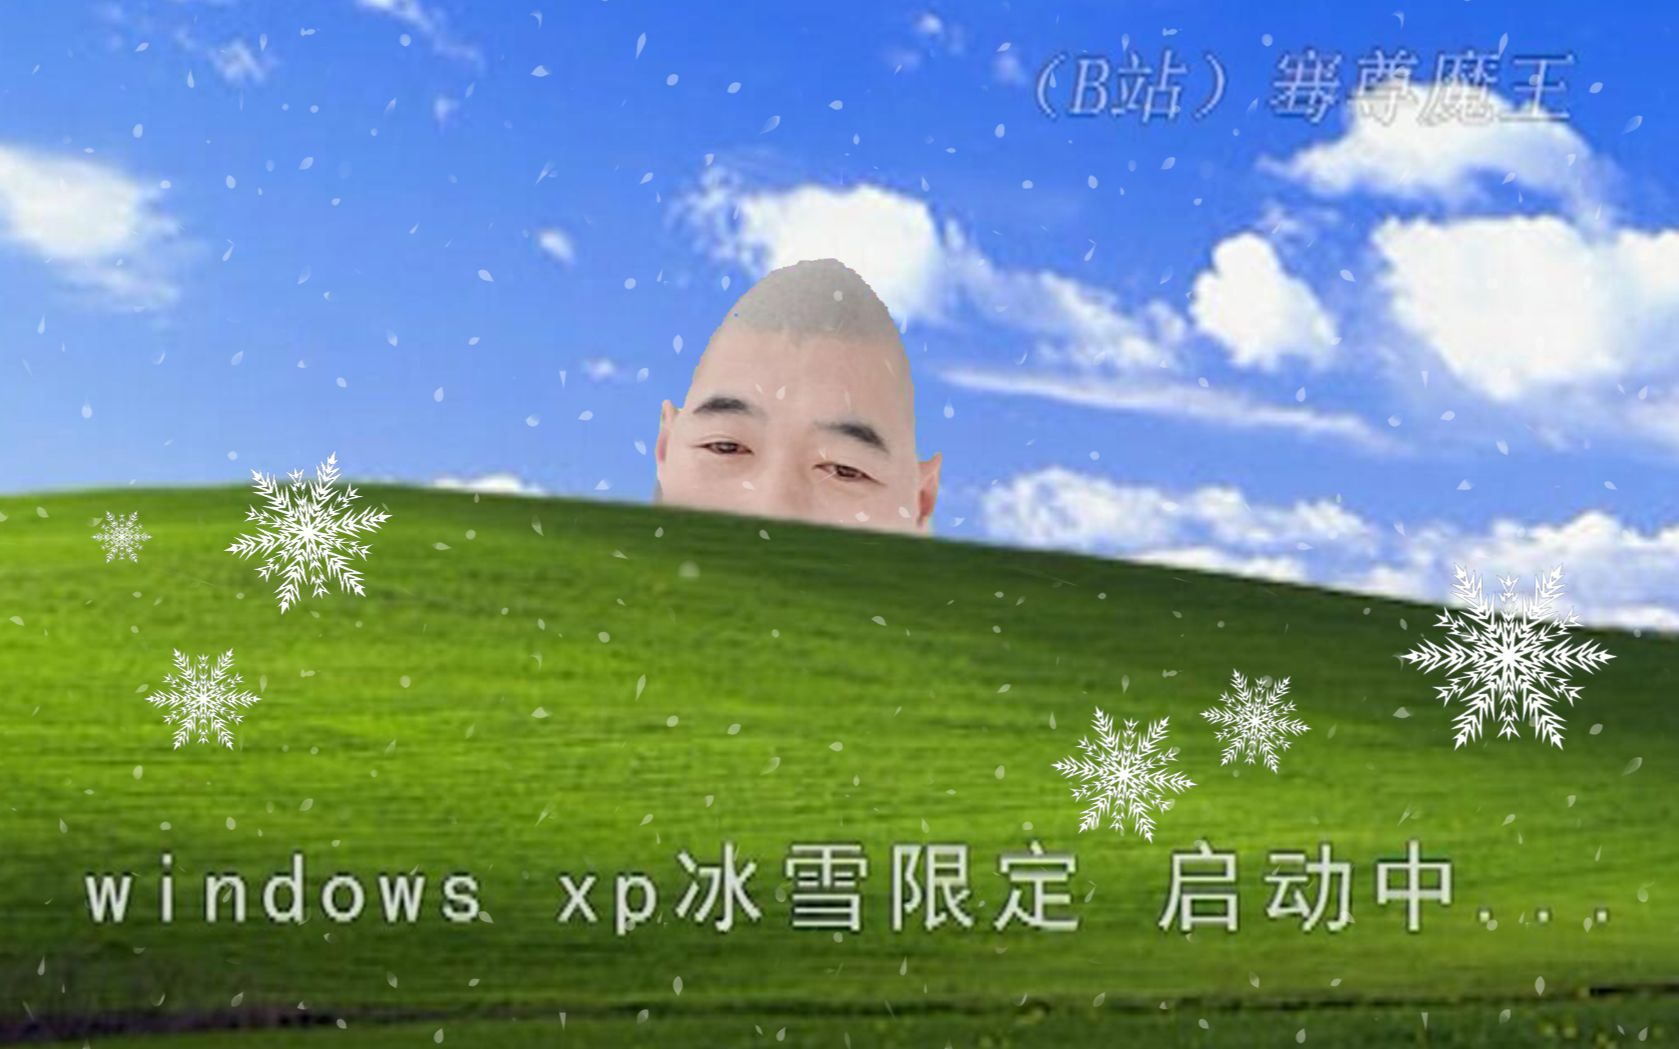 Windows X（ue）P（iao）冰雪节限定